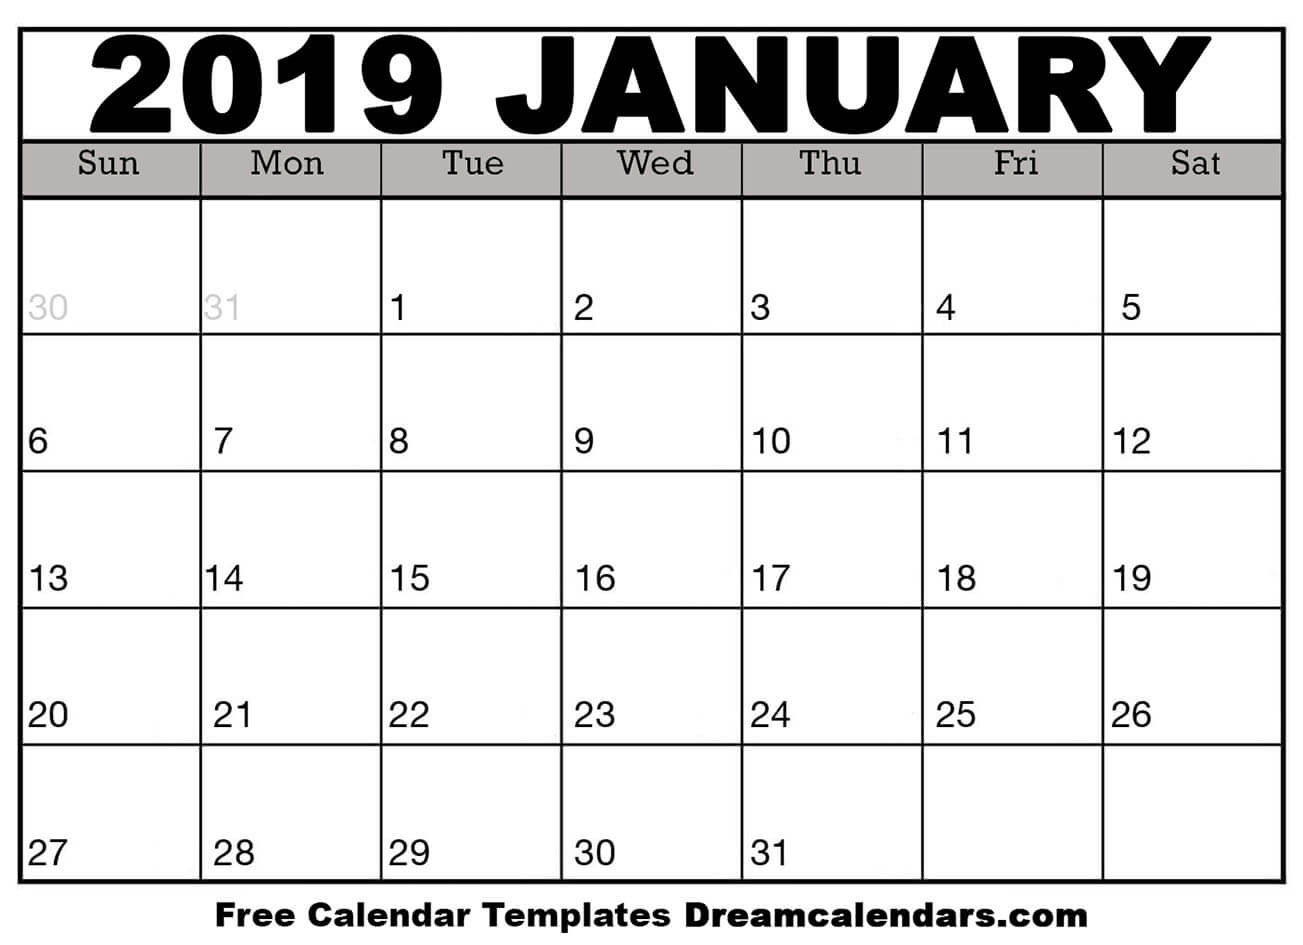 2019 Printable Calendar Word 2019 Calendar Template Free Printable 2019 Calendar Rkzdya Dpelyo